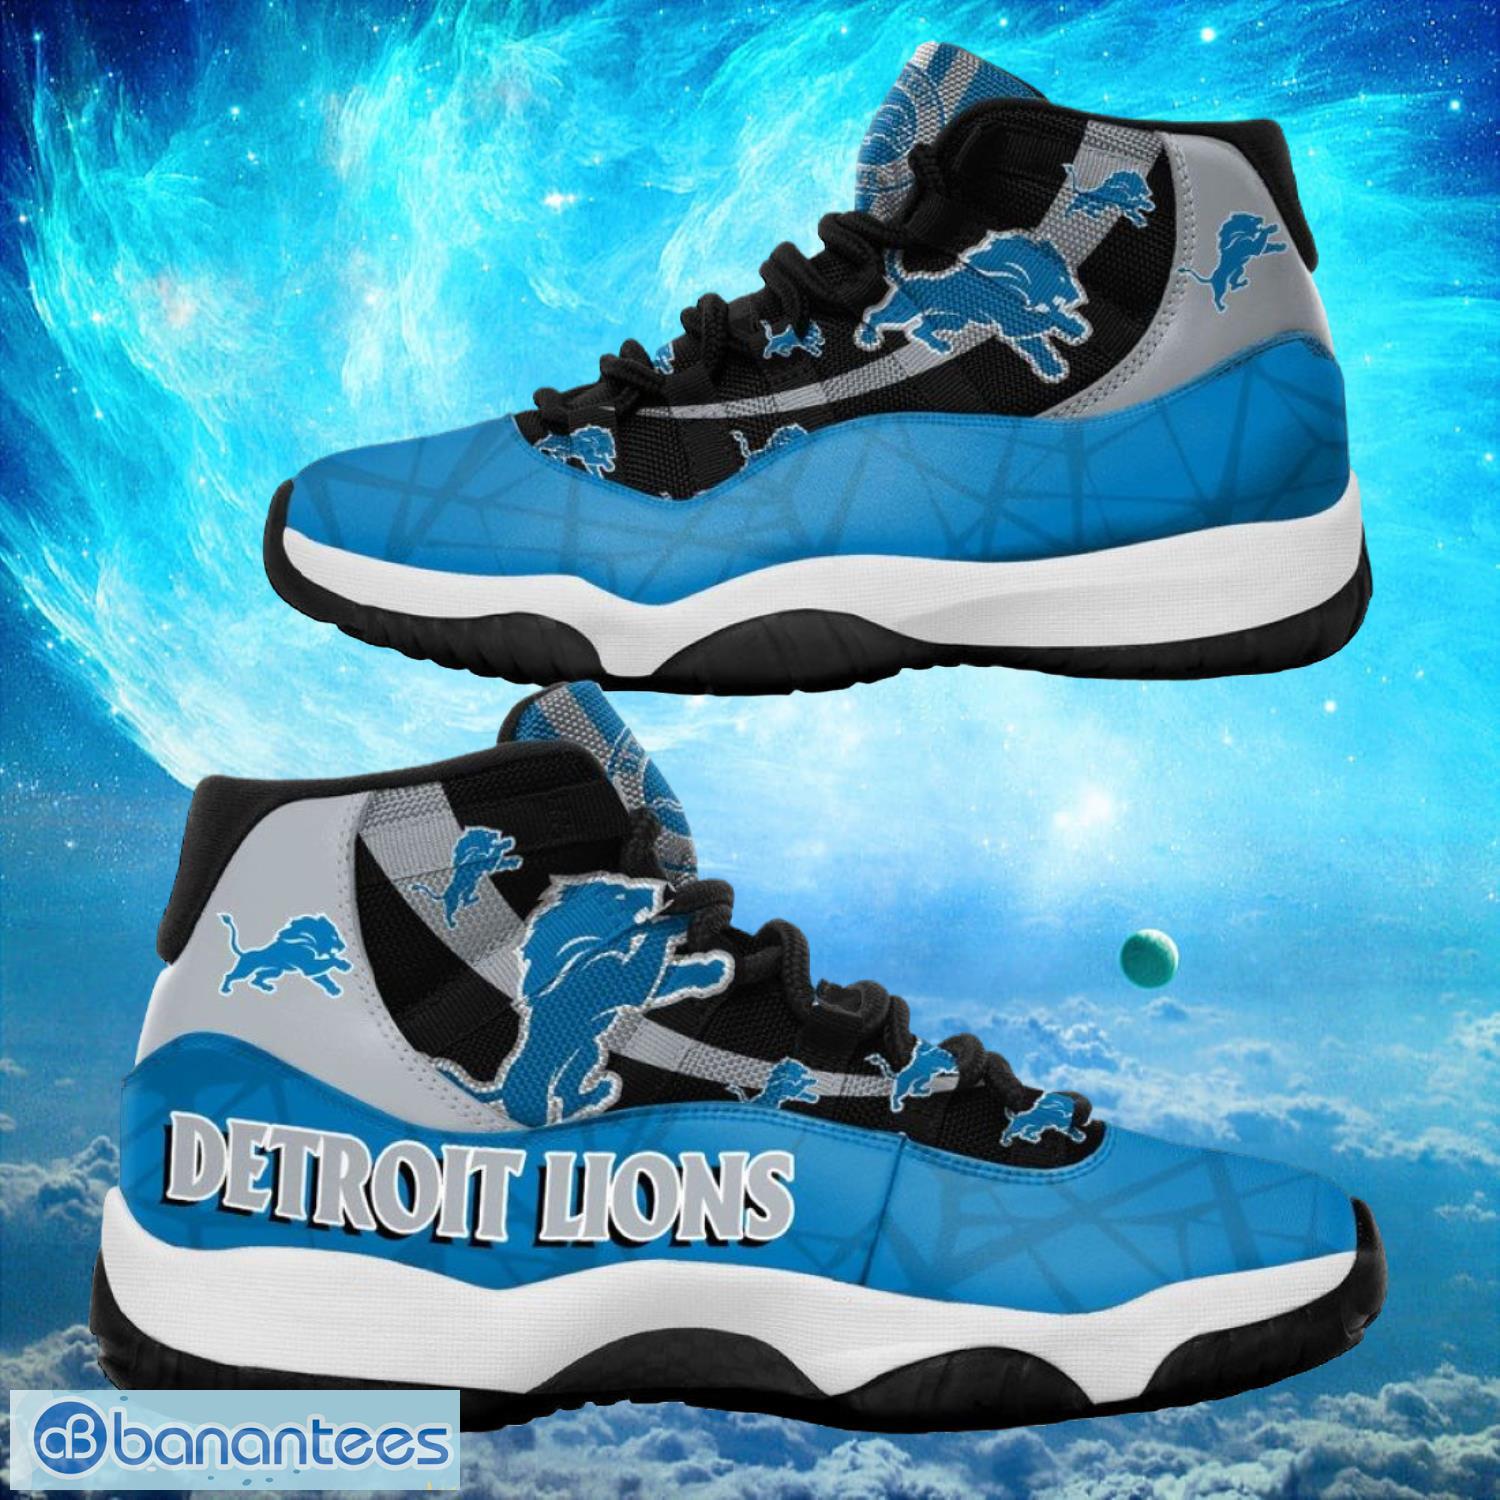 Detroit Lions NFL Air Jordan 11 Sneakers Shoes Gift For Fans Product Photo 1